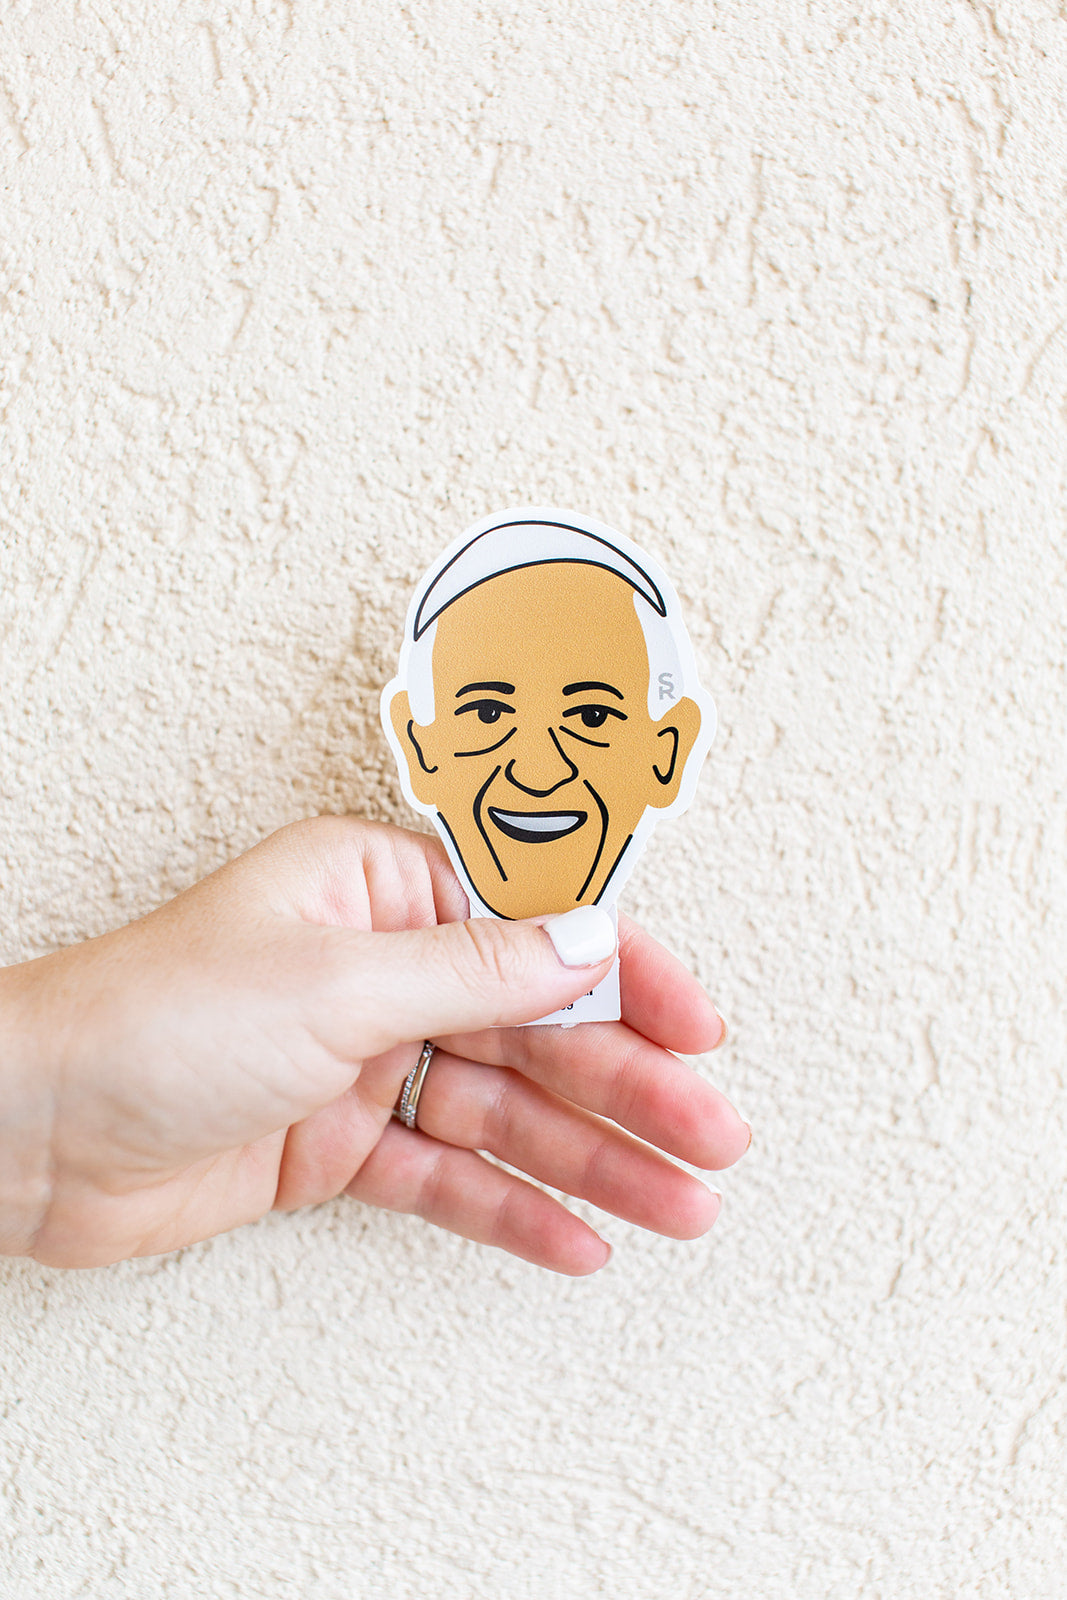 Pope Francis Sticker